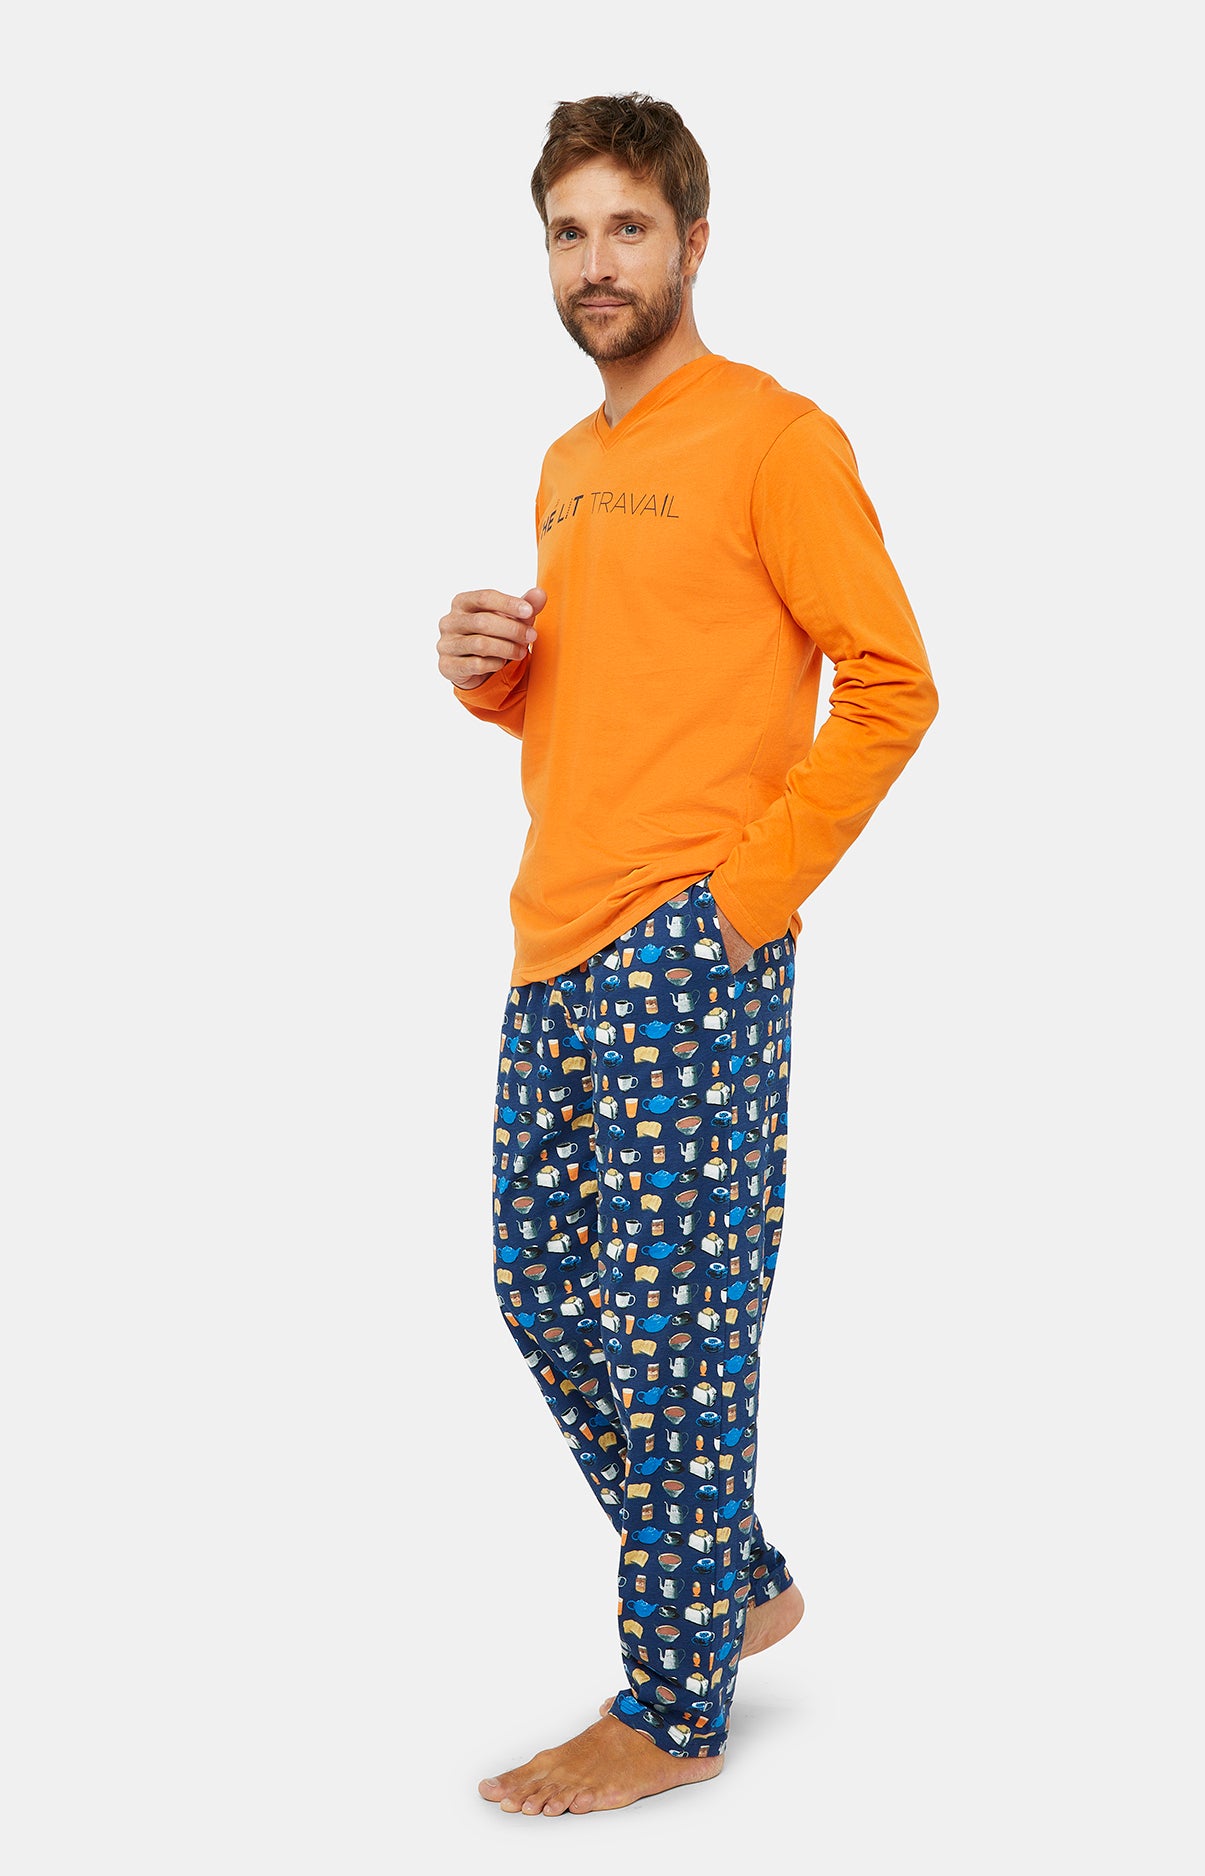 Pyjama Thé Lit Travail - Orange